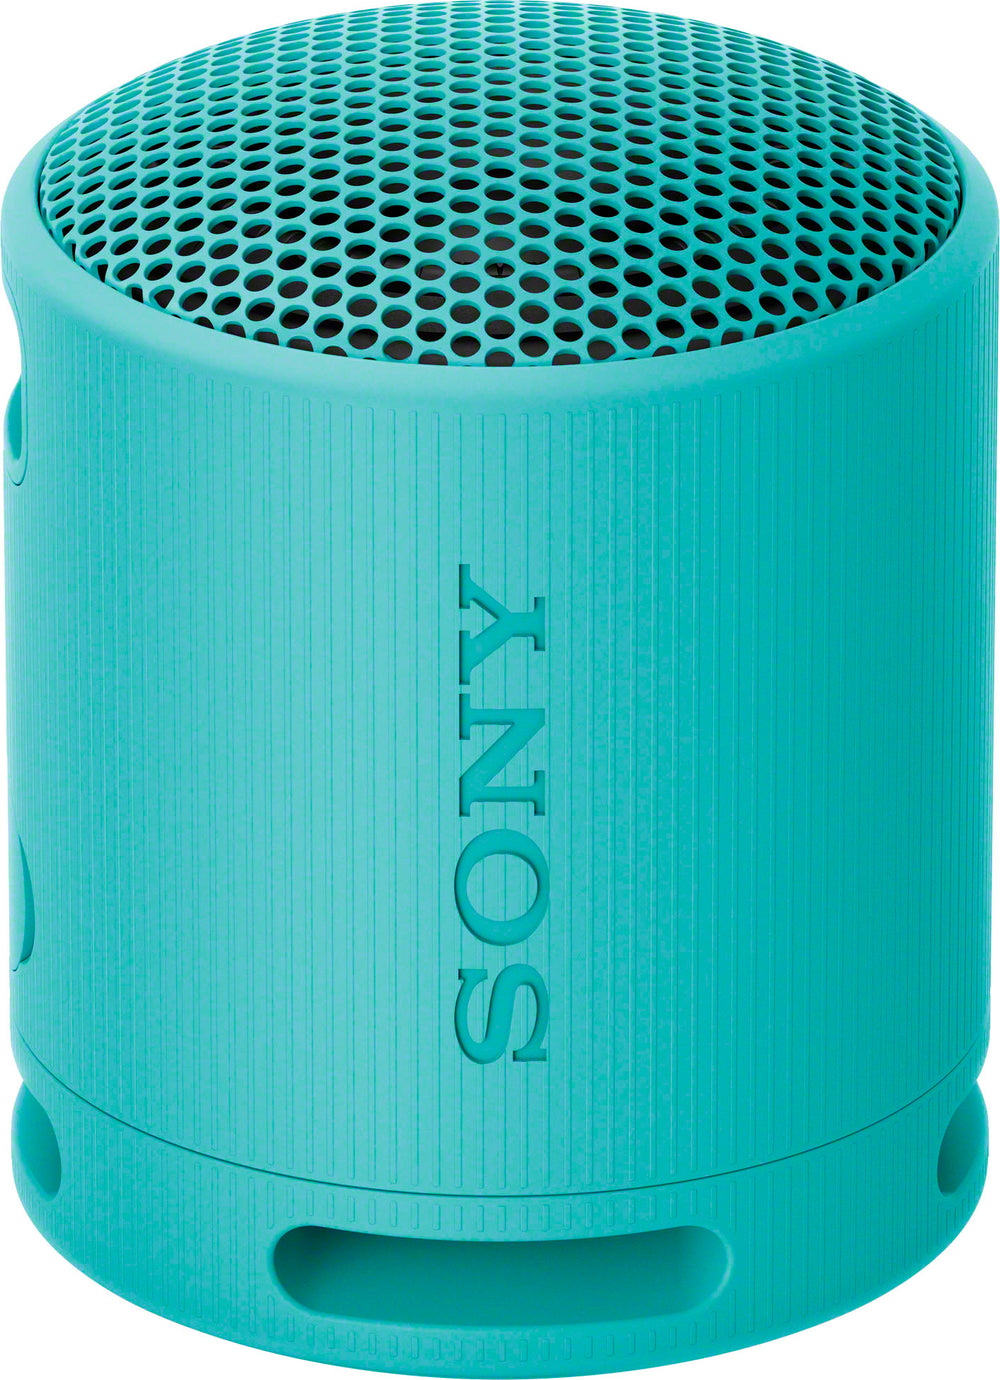 Sony - XB100 Compact Bluetooth Speaker - Blue_1